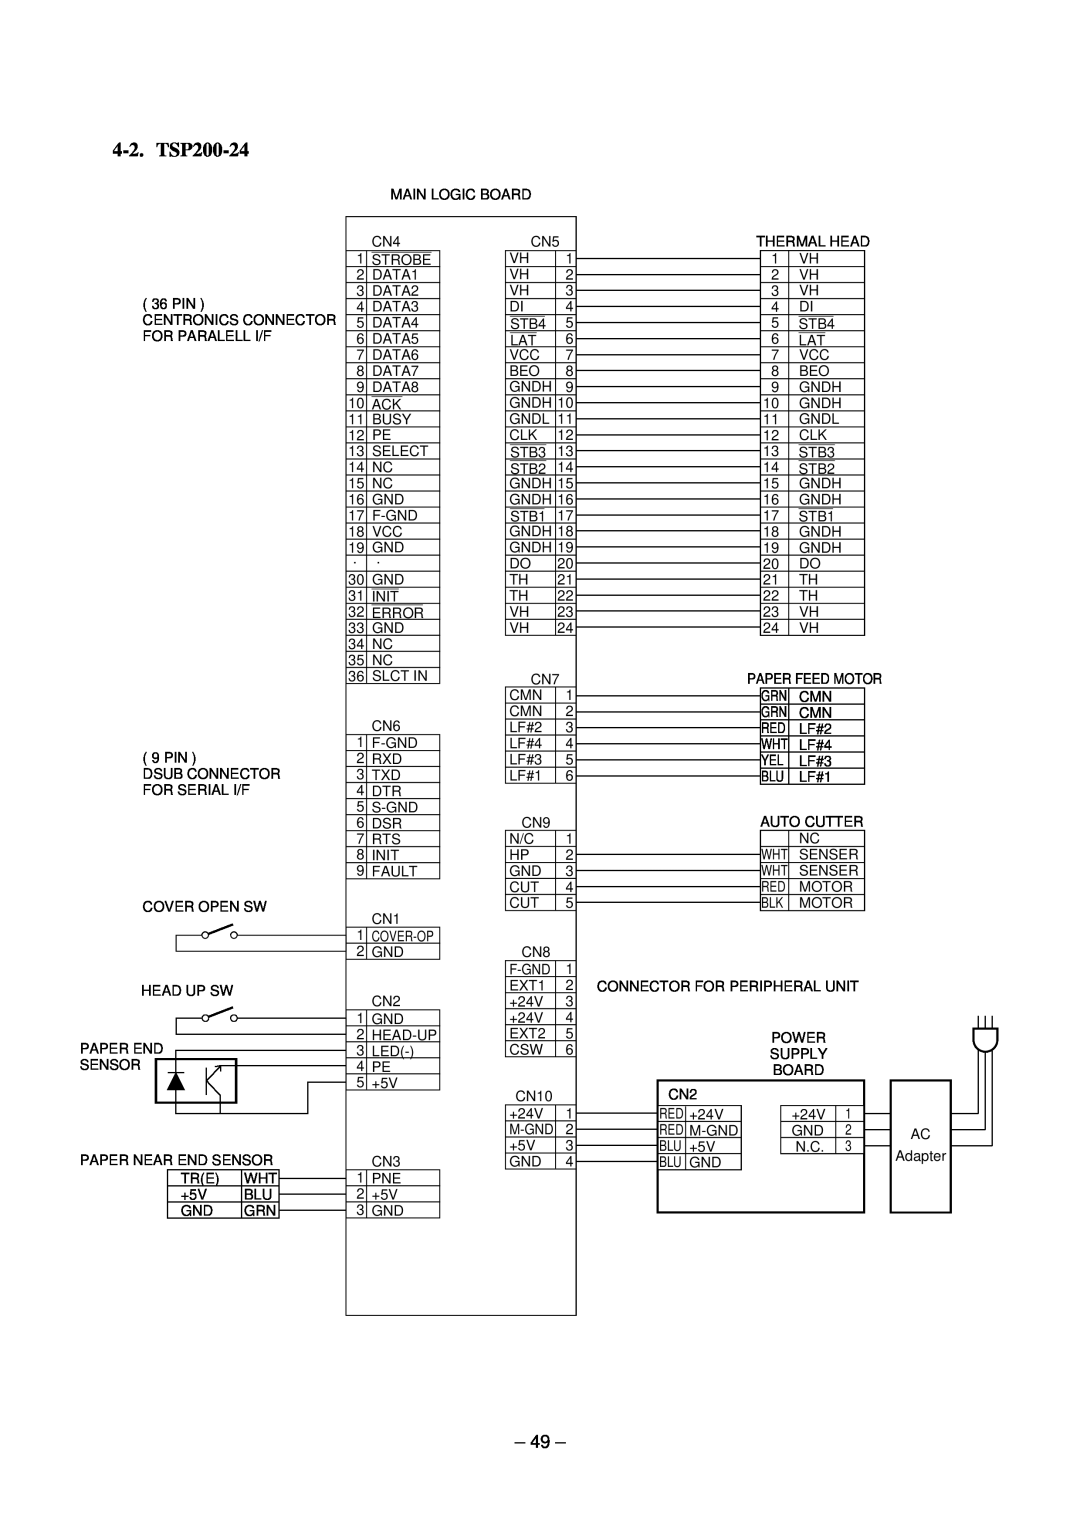 Star Micronics technical manual TSP200-24 